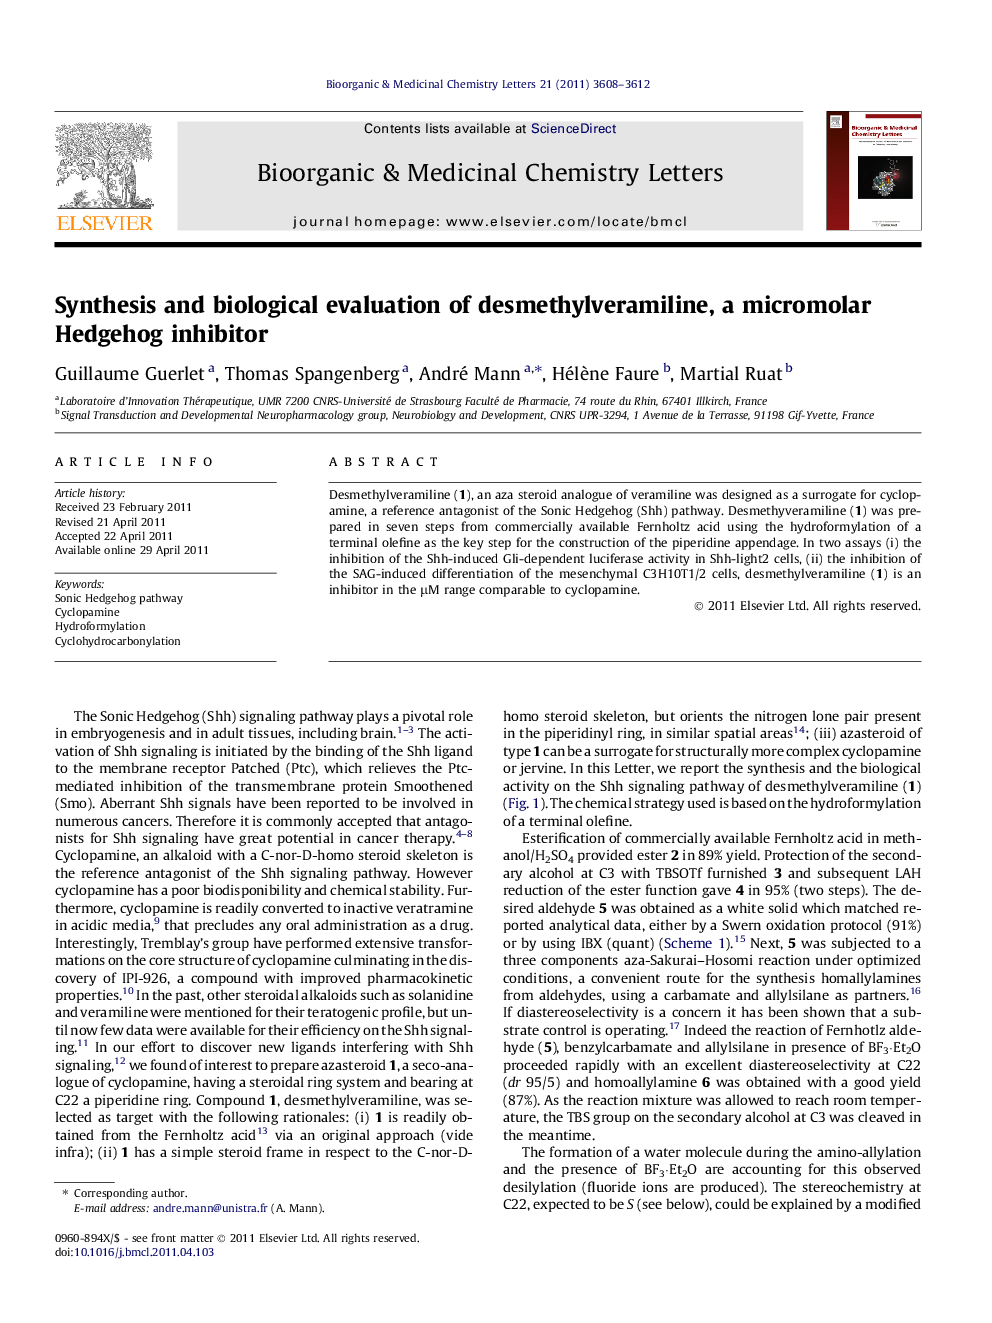 Synthesis and biological evaluation of desmethylveramiline, a micromolar Hedgehog inhibitor